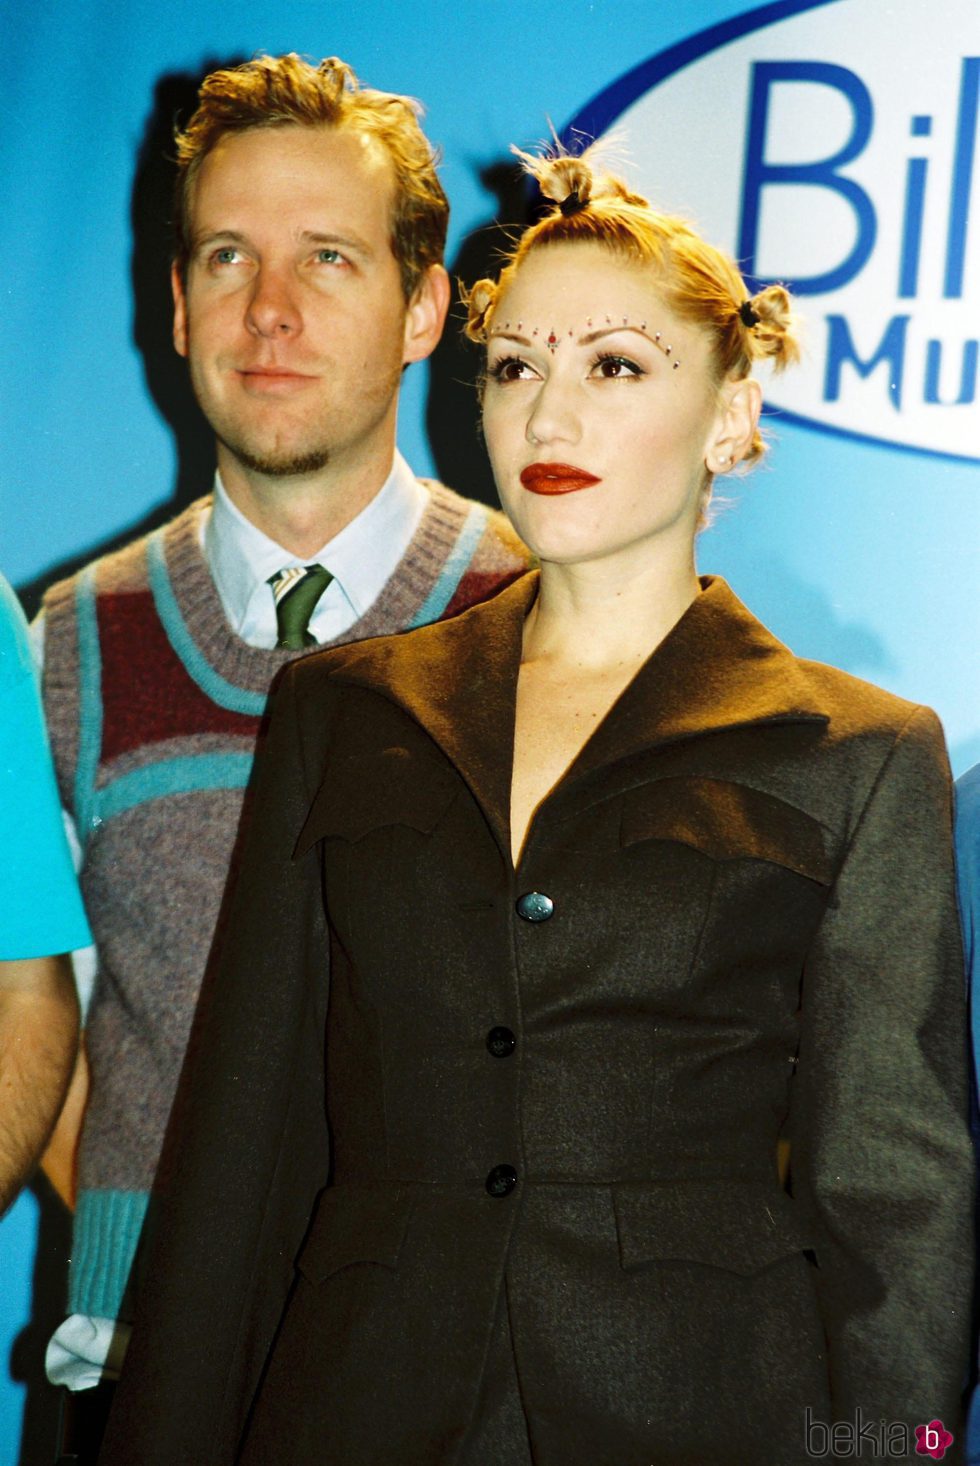 Gwen Stefani en los premios Billboard Music Awards 1997